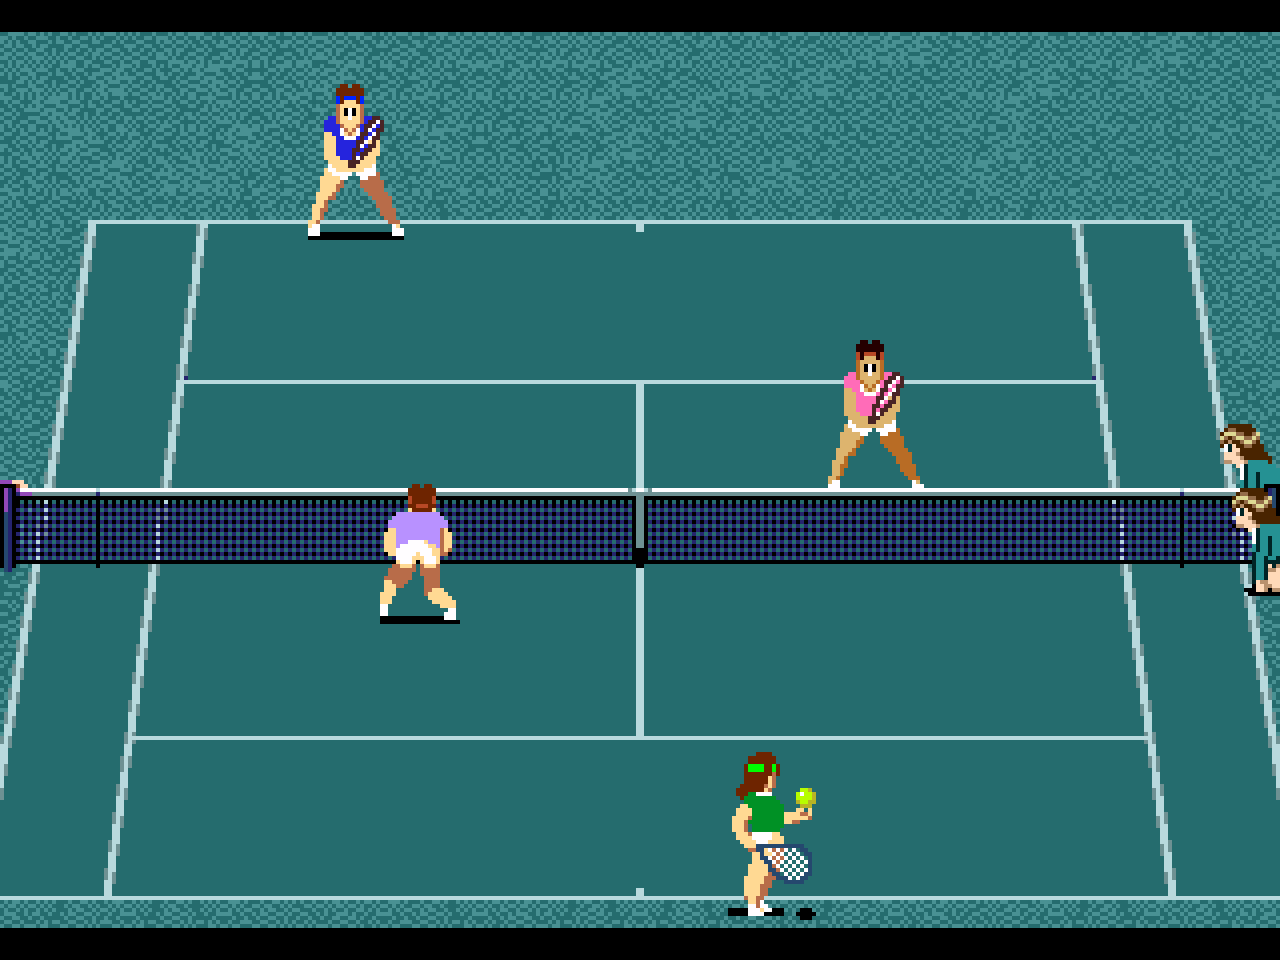 grand slam tennis 2 pc game free download